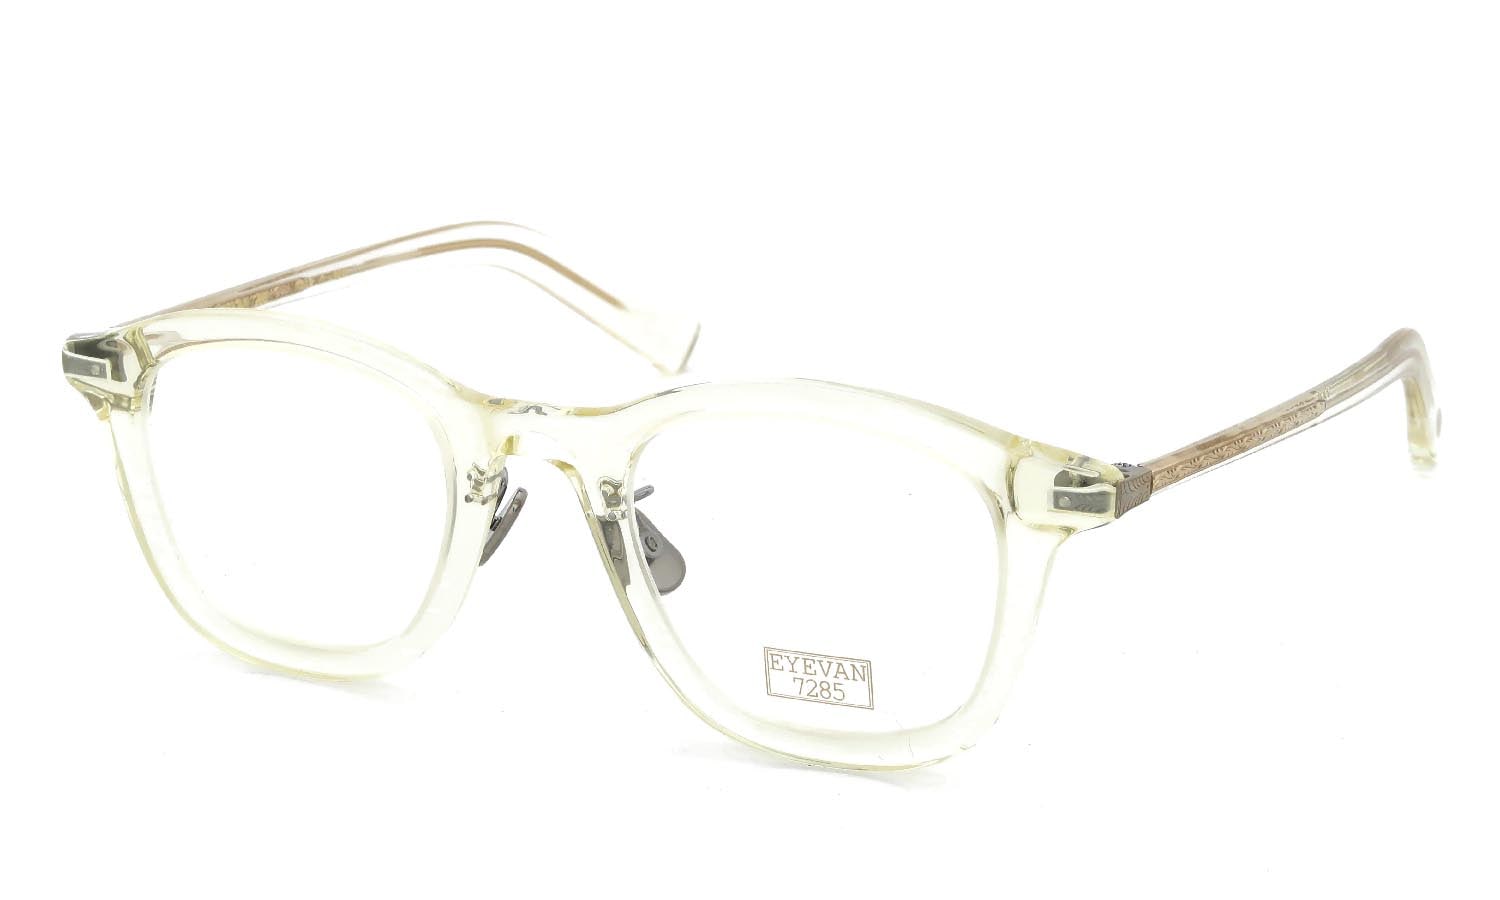 eyevan 7285 / クリアフレーム 眼鏡 サングラス - サングラス/メガネ